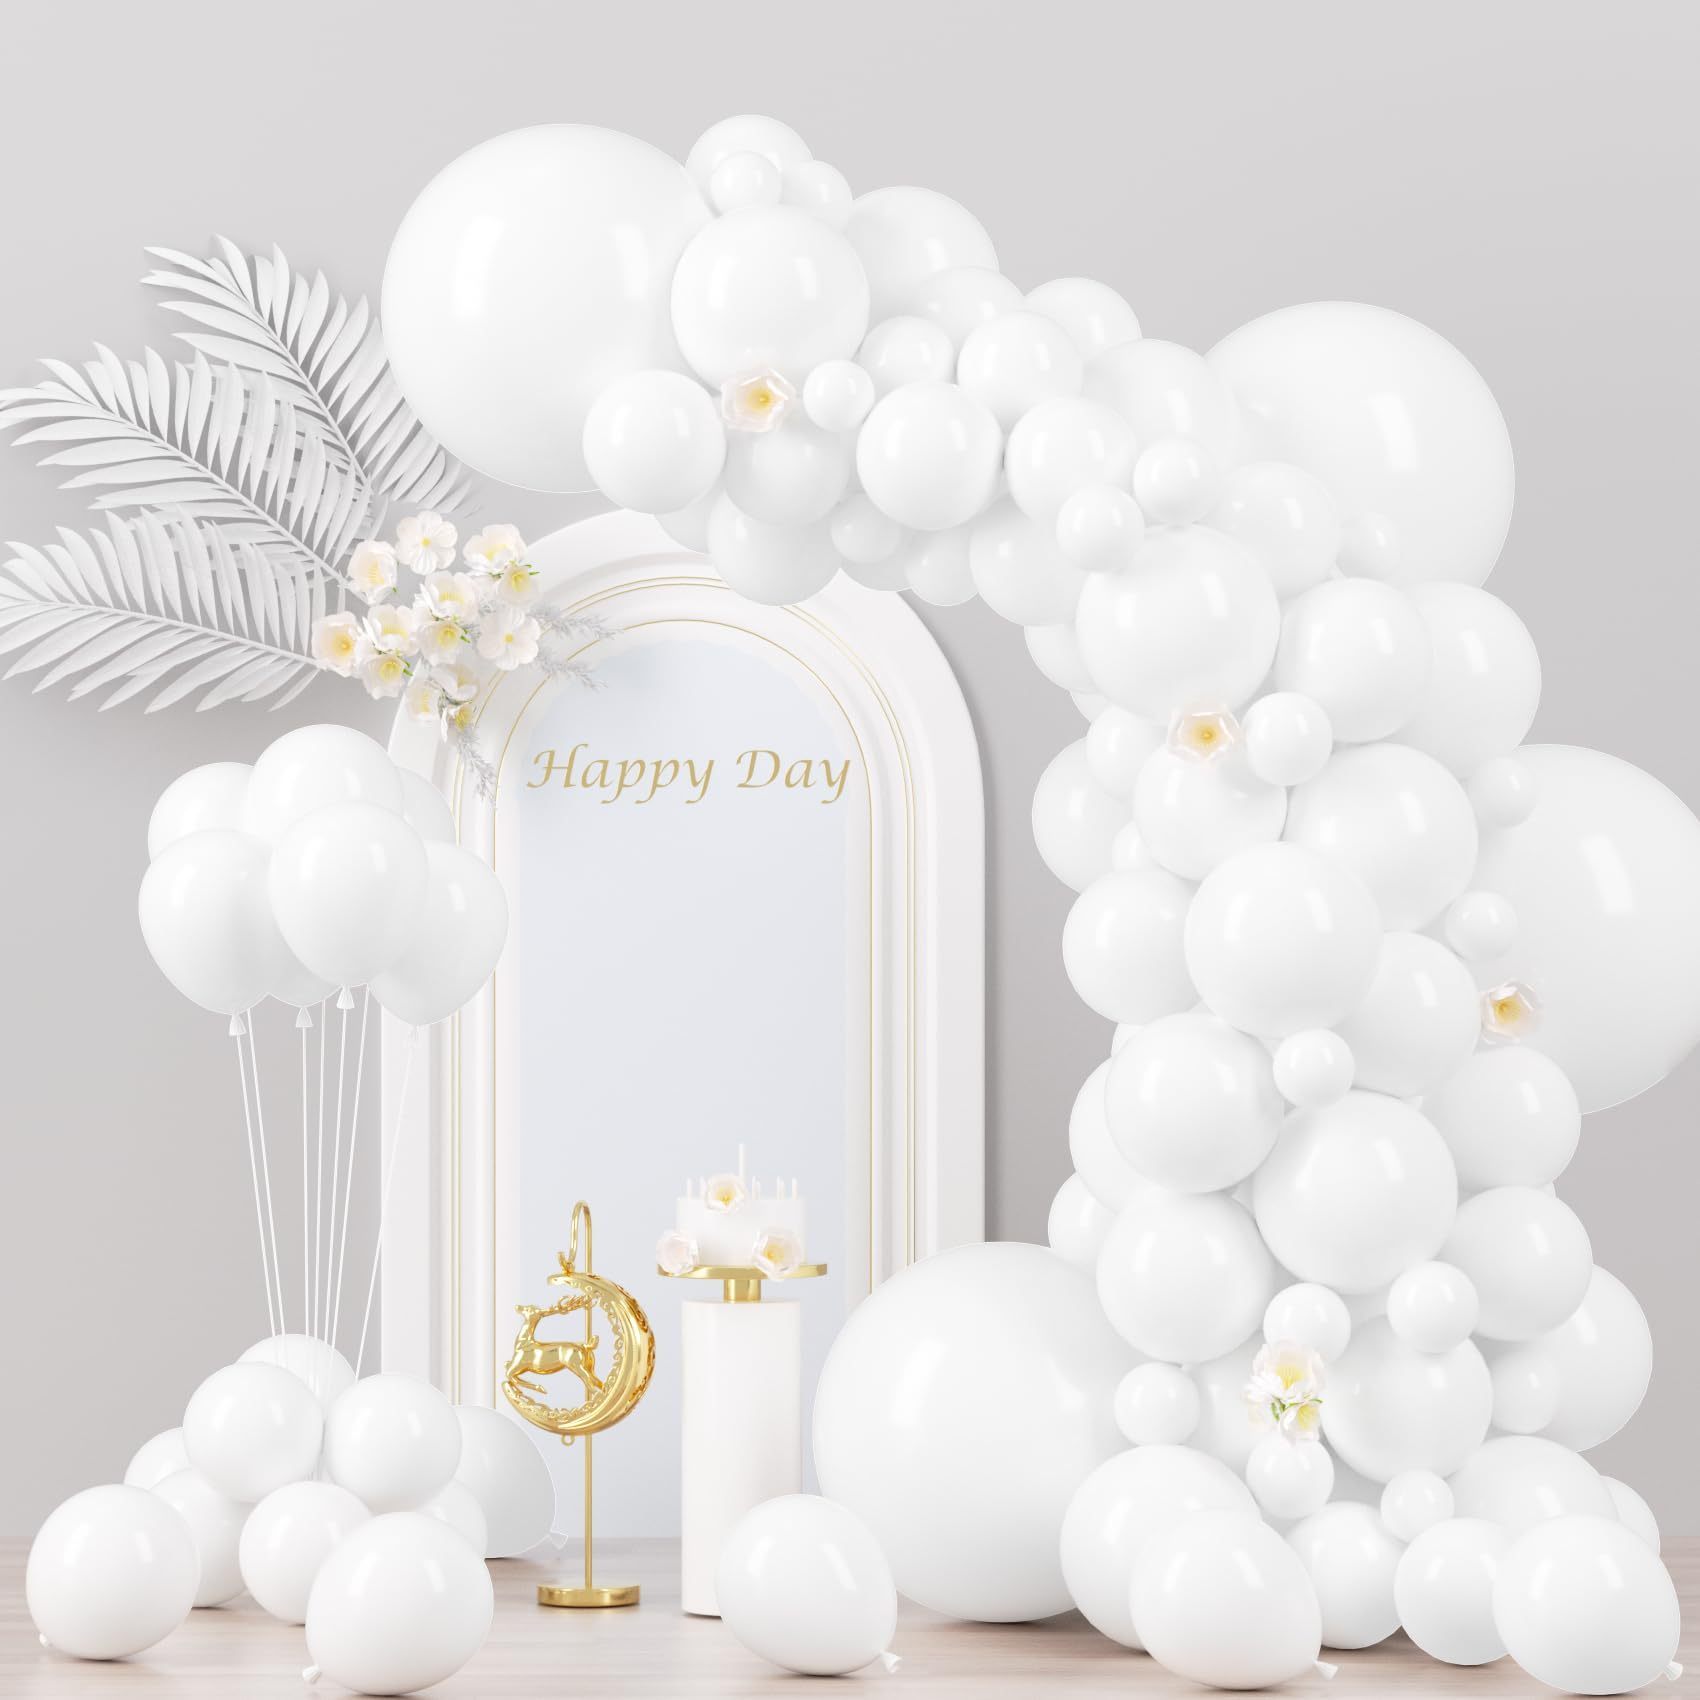 

132-piece White Latex Balloon Set - Assorted Sizes 18", 12", 10", 5" For Birthday, Shower, Graduation, Wedding & Anniversary Celebrations